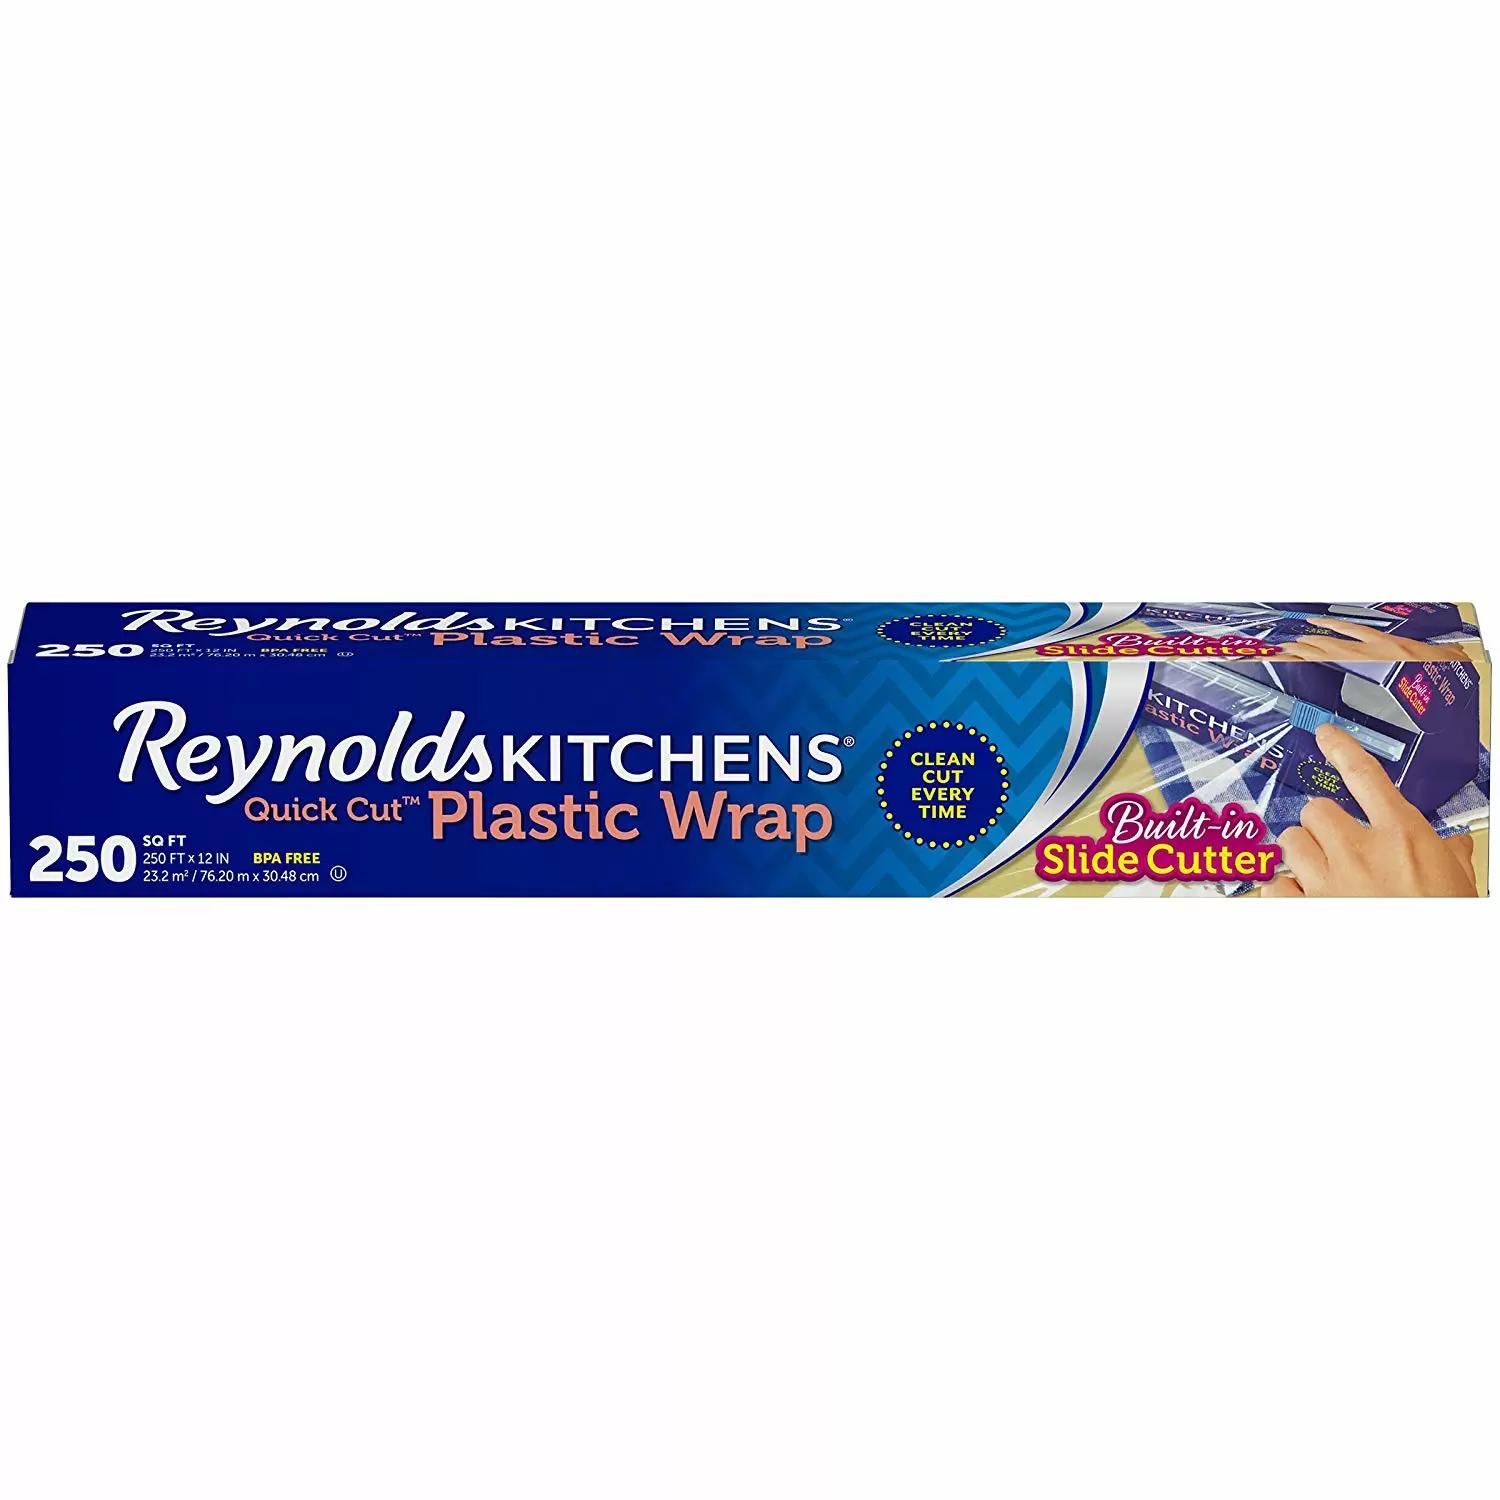 250 sqft Reynolds Kitchens Quick Cut Plastic Wrap for $2.79